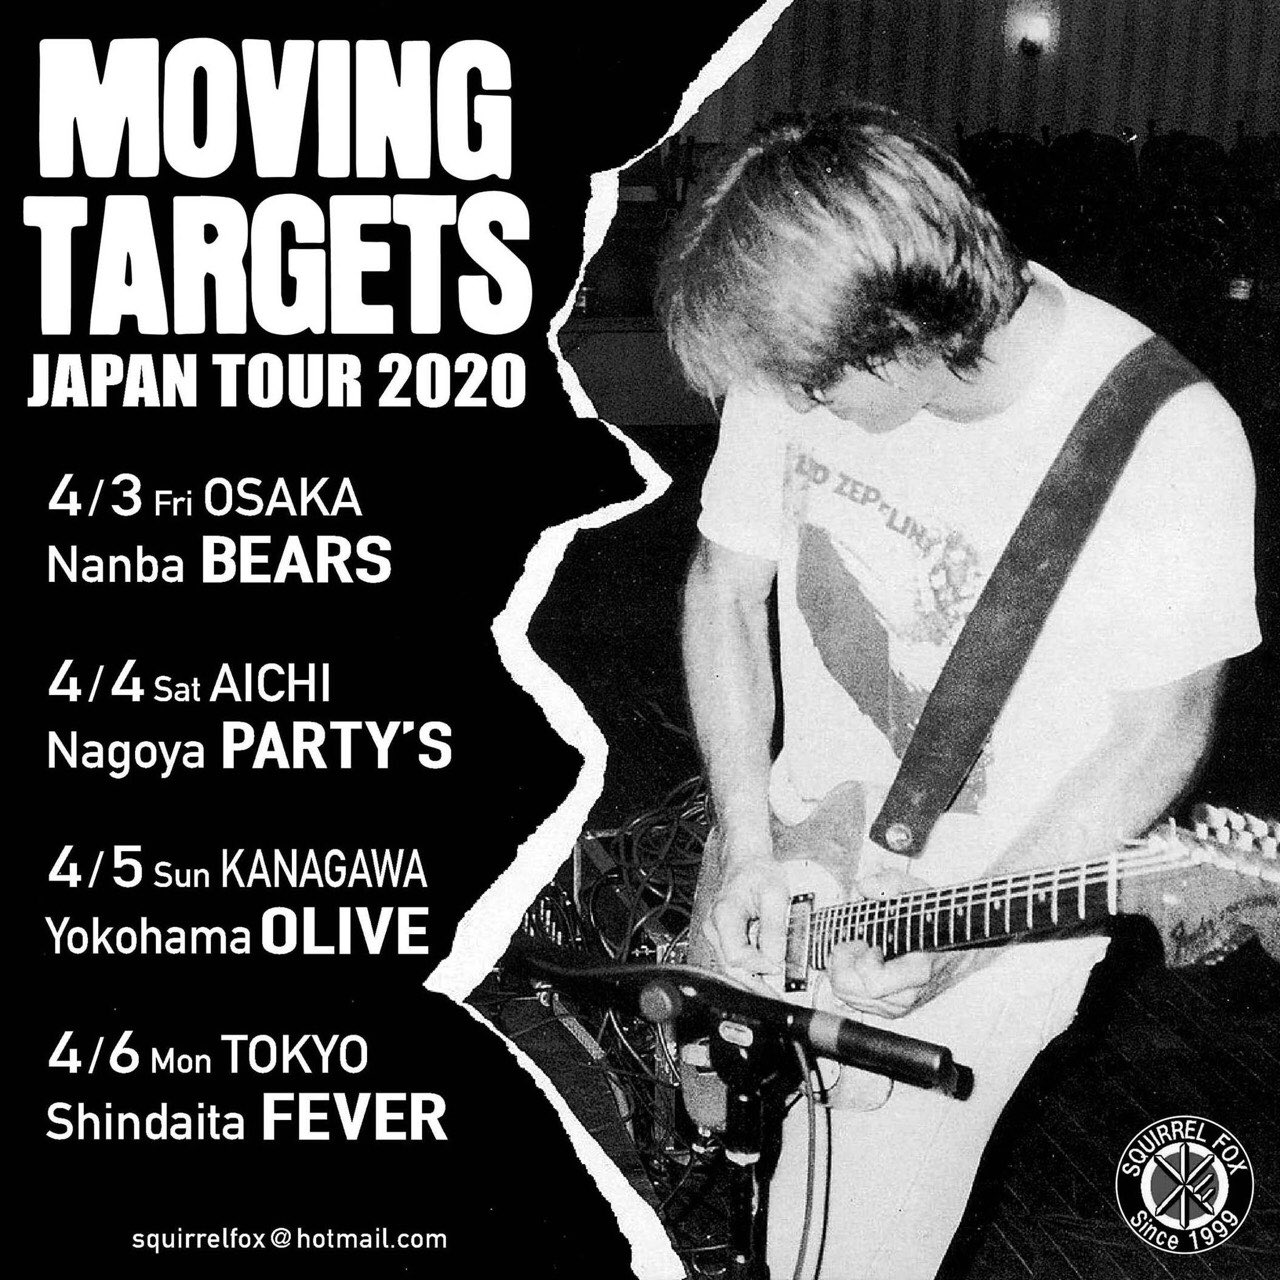 MOVING TARGETS JAPAN TOUR 2020